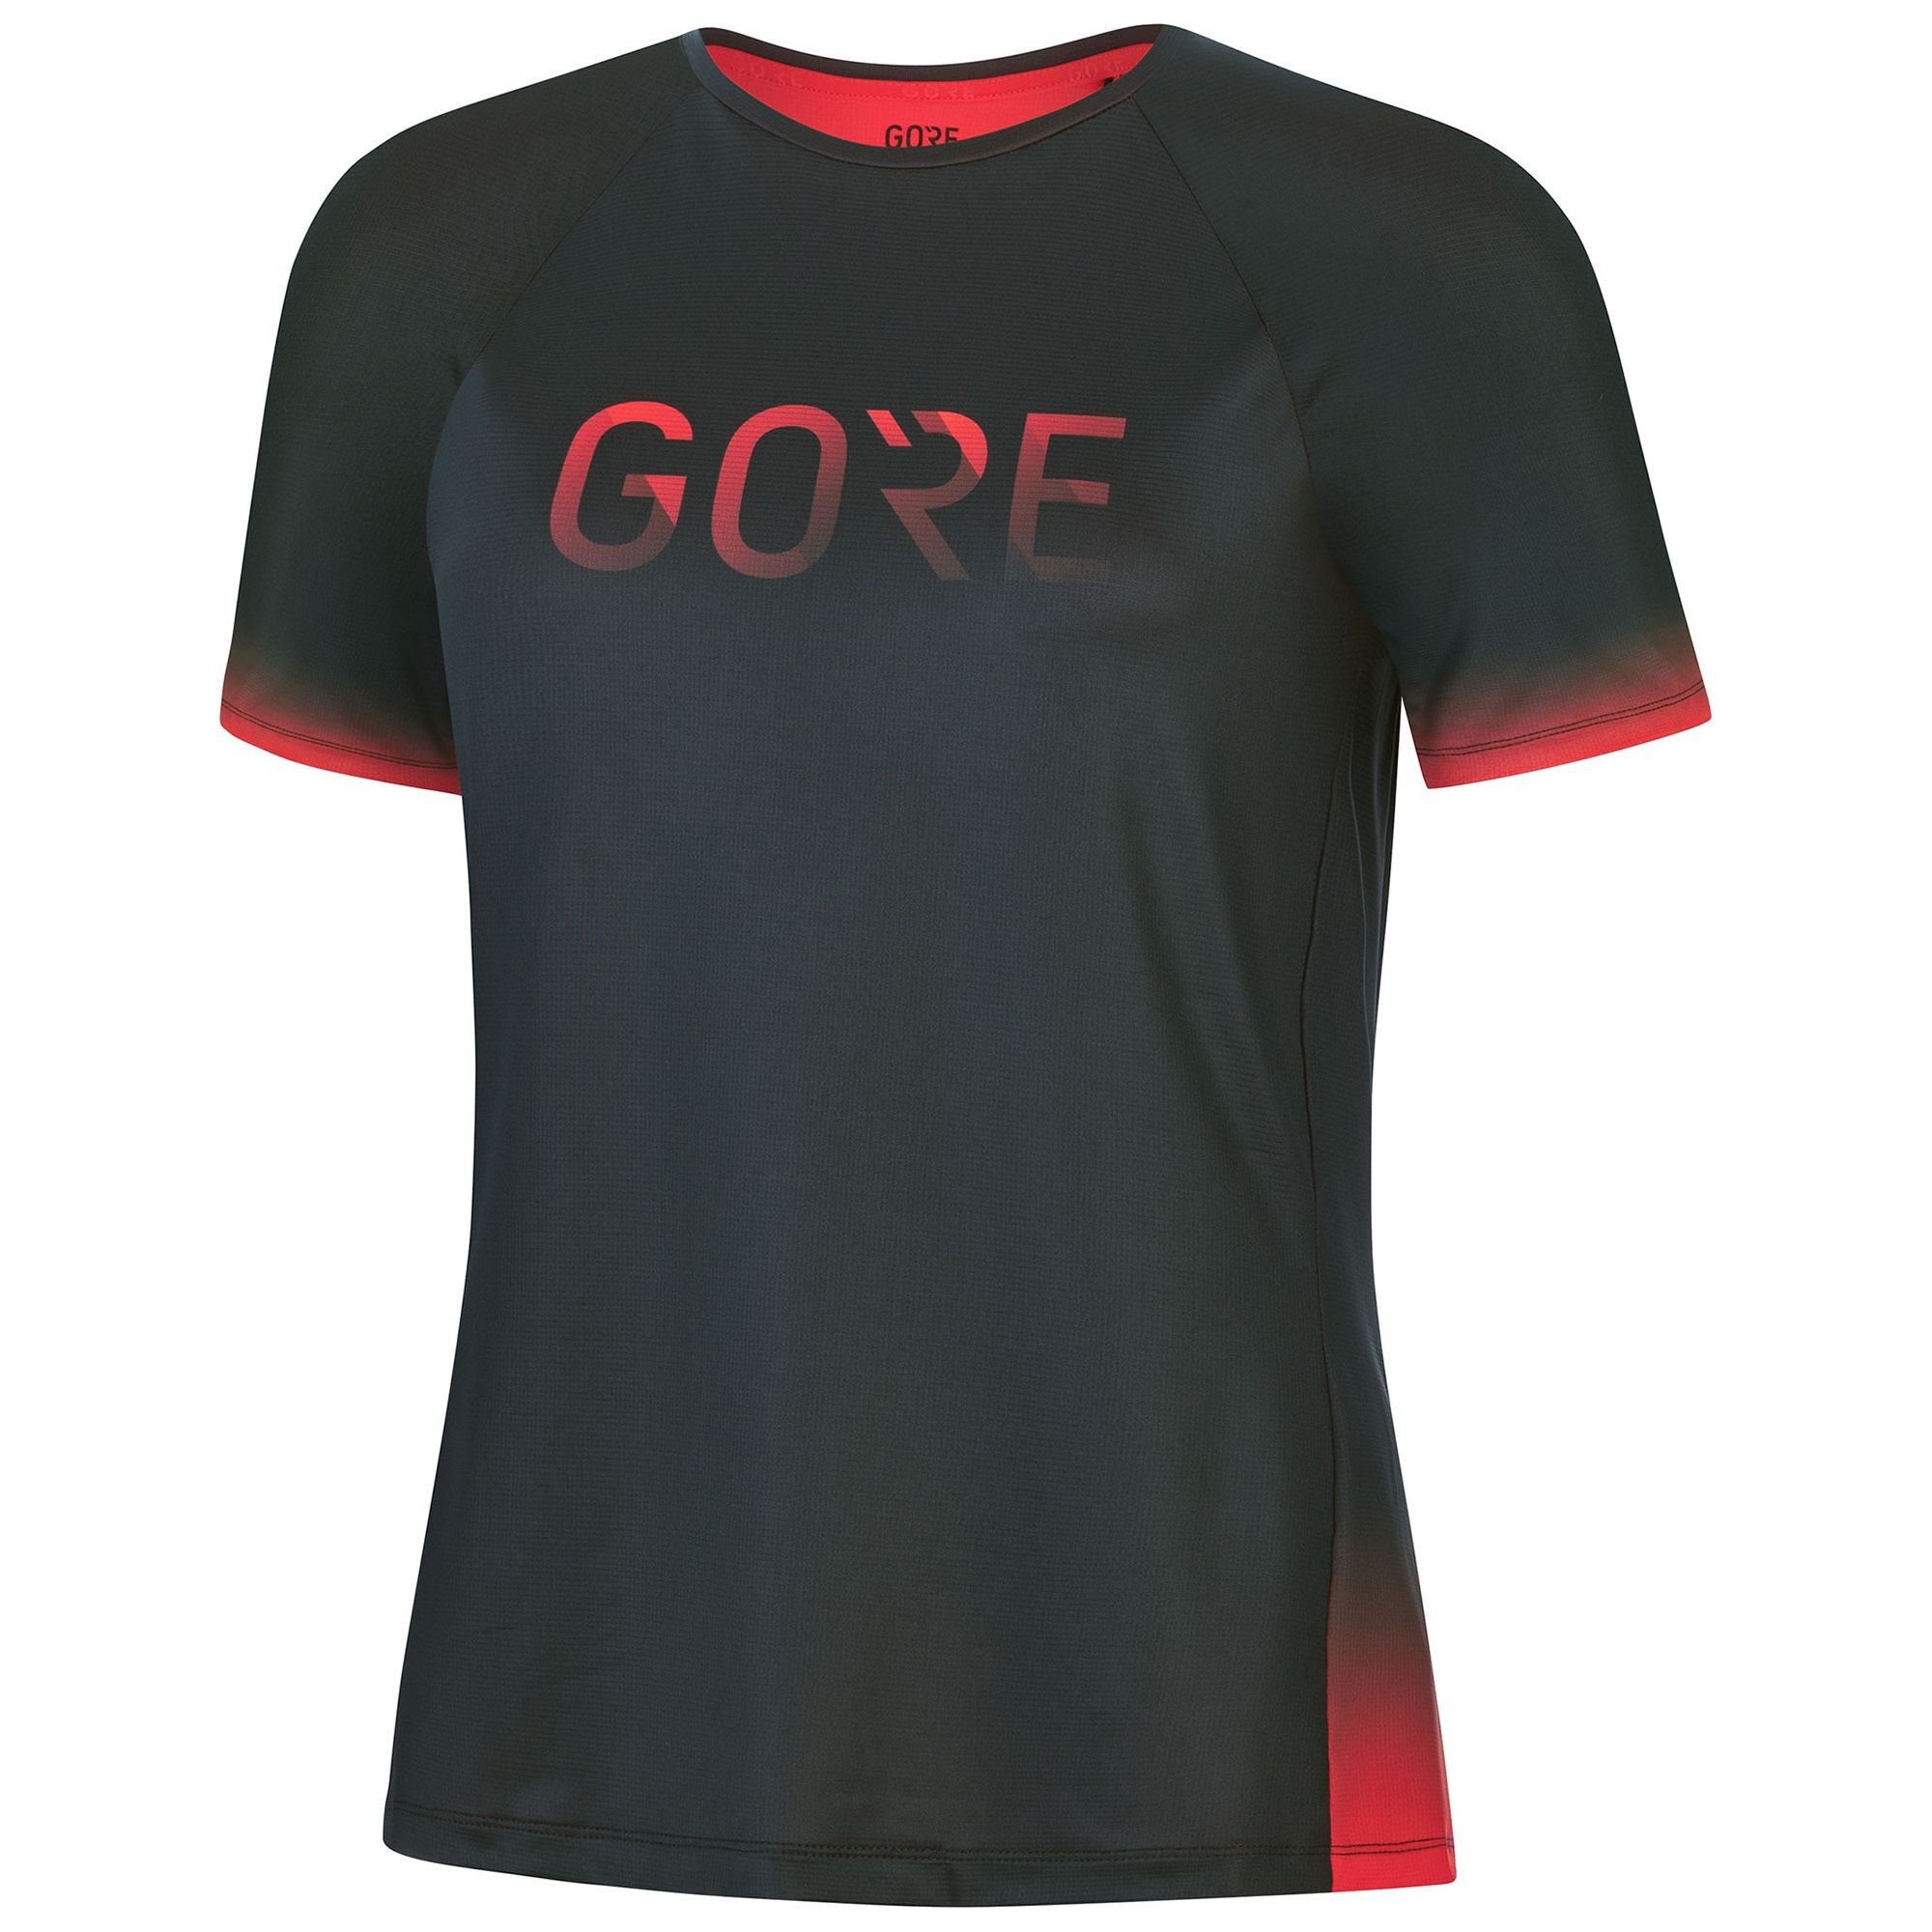 Gore Wear Devotion Shirt - T-shirt - Women's